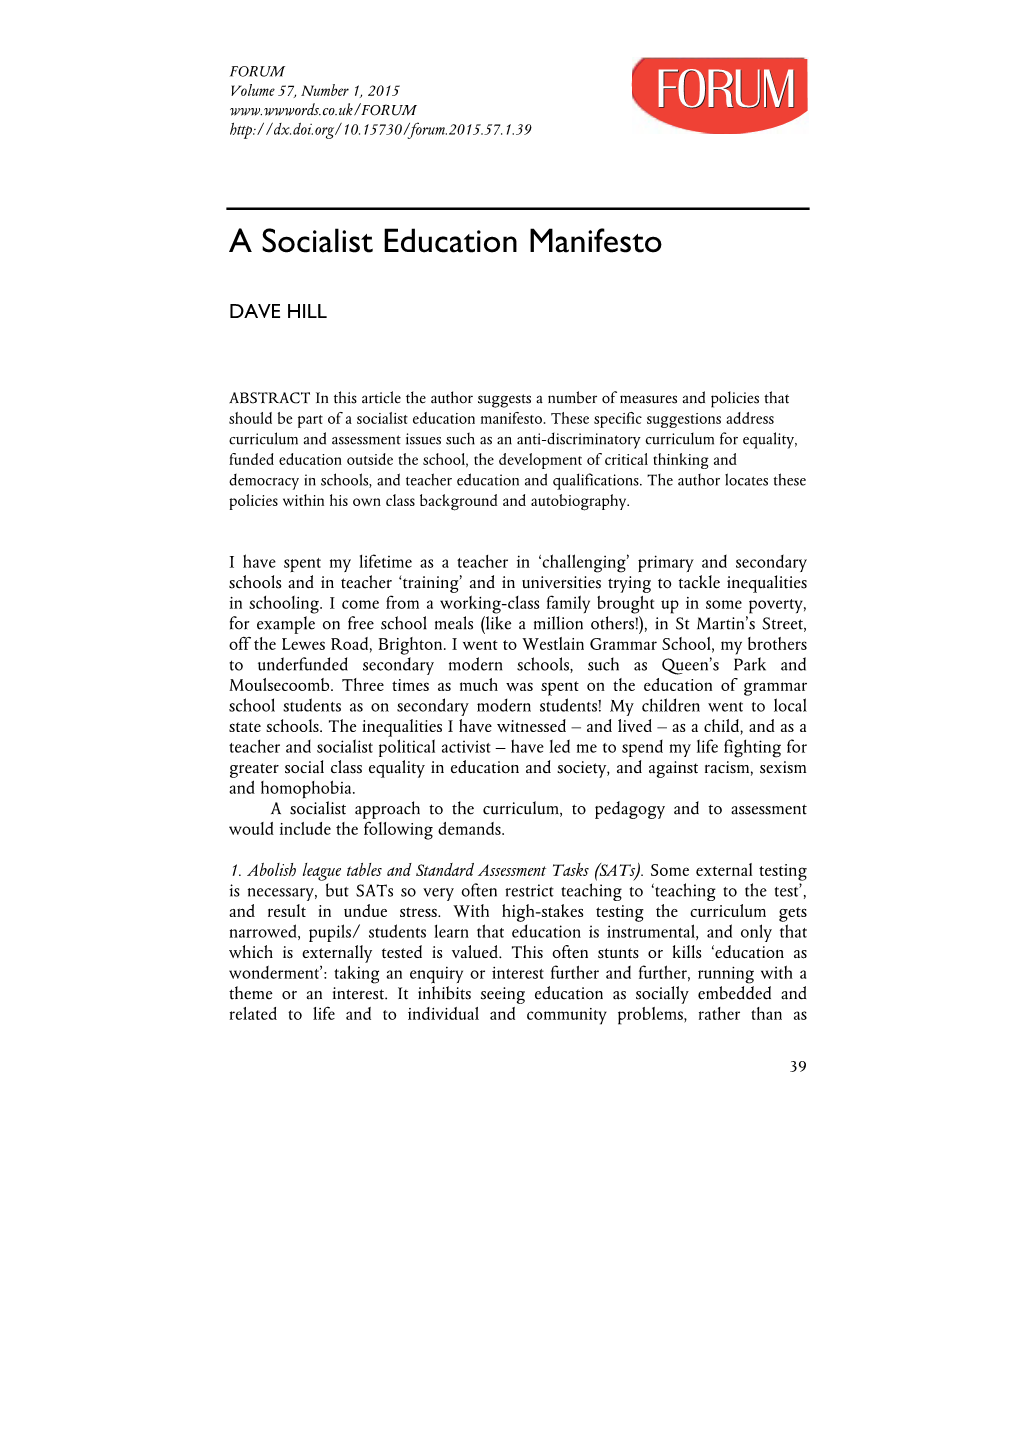 A Socialist Education Manifesto